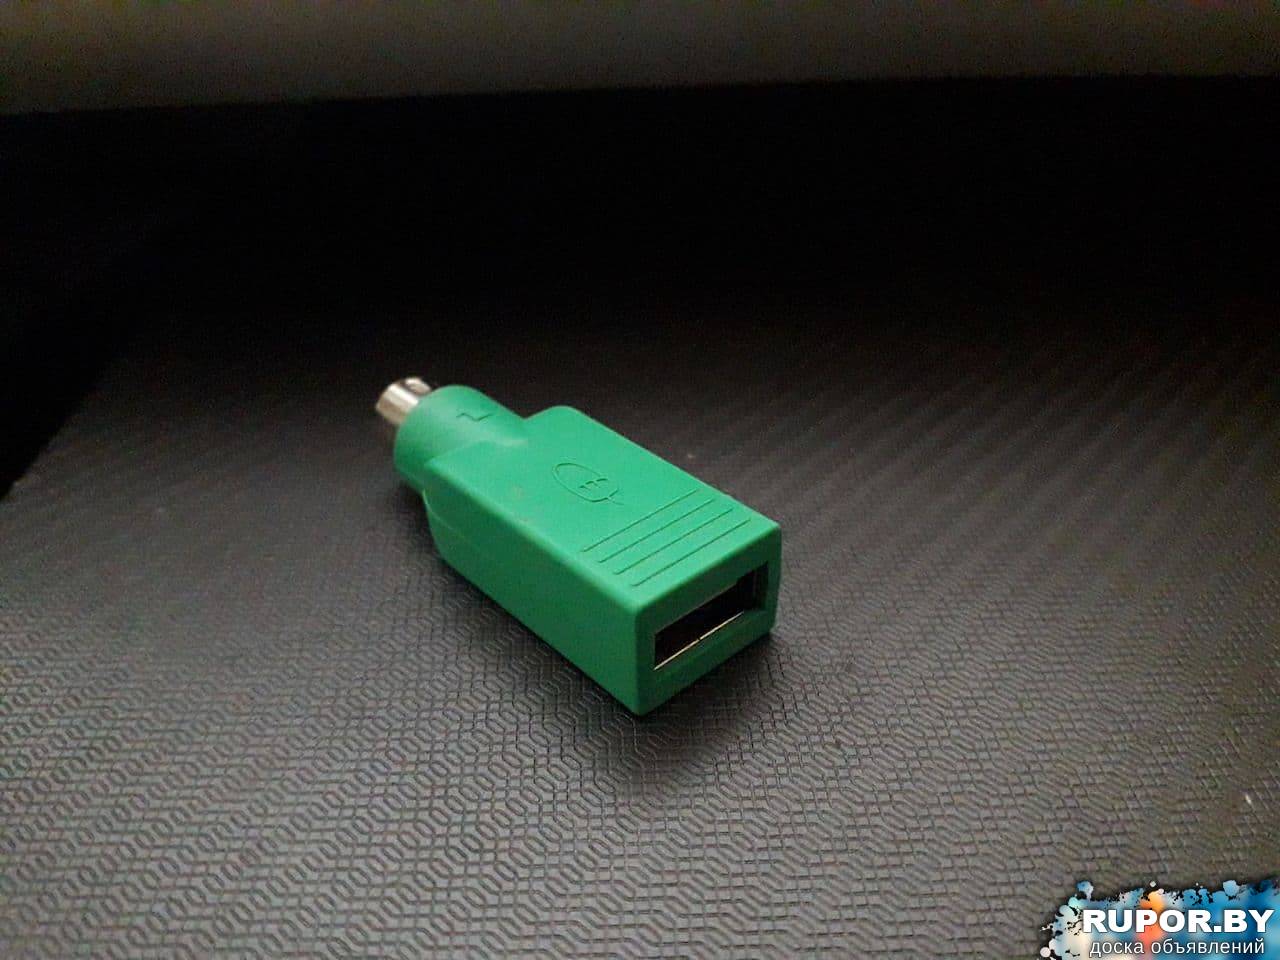 Переходник (адаптер) с USB на PS/2 для мышек - 0